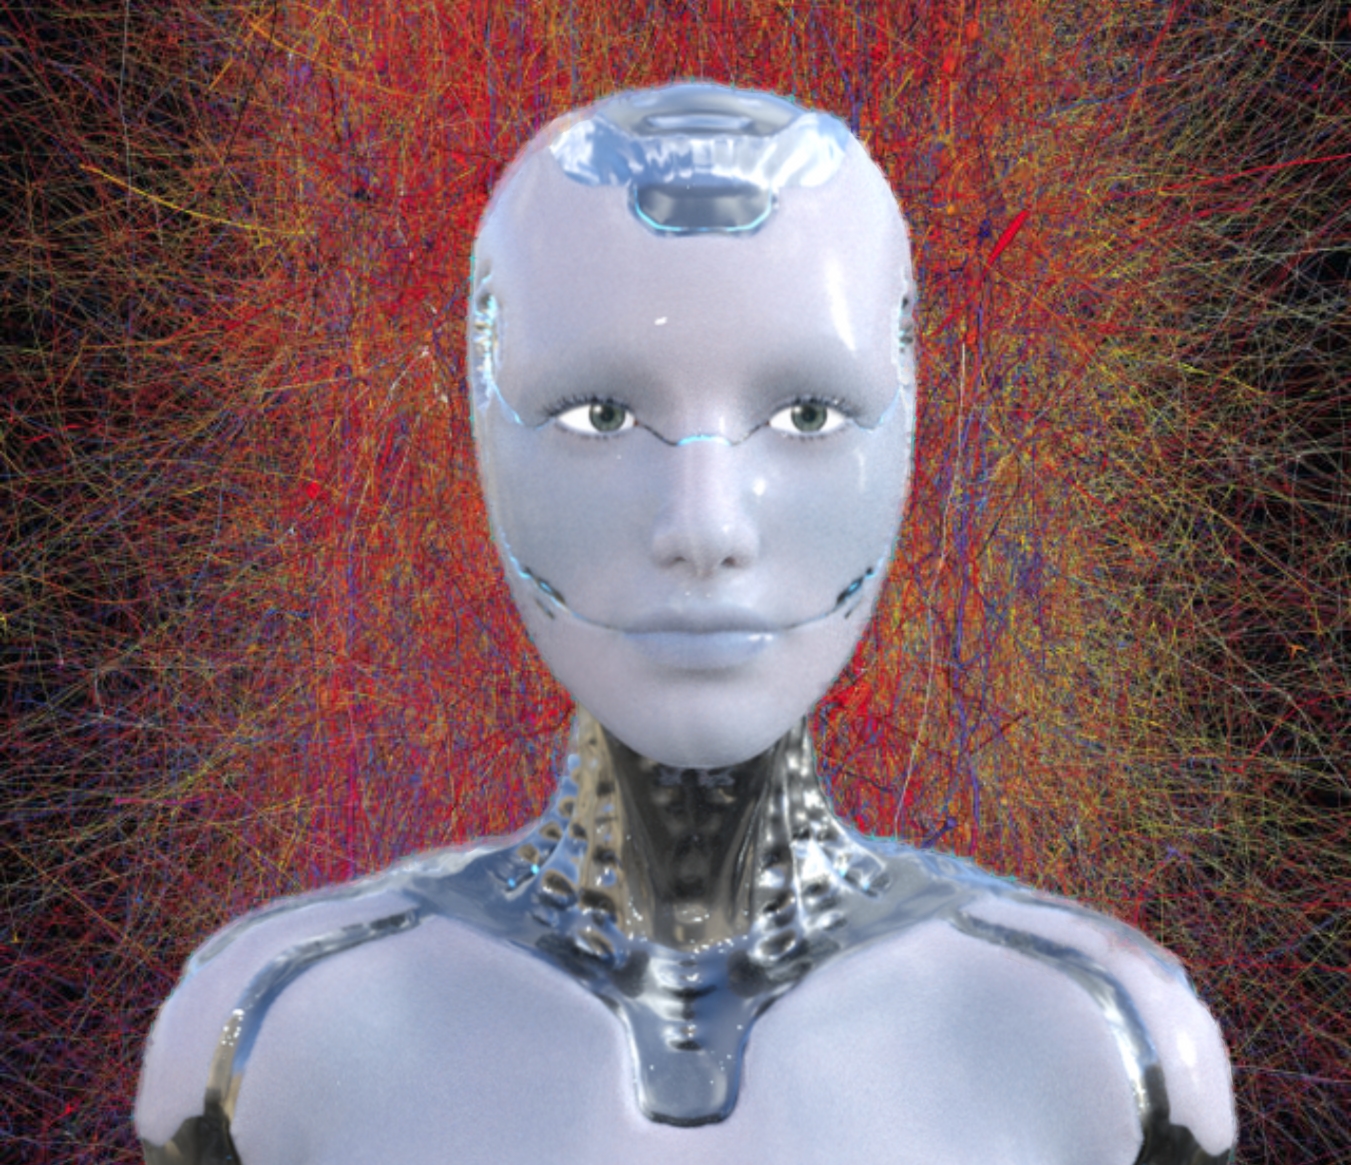 Cyborg with neuron background